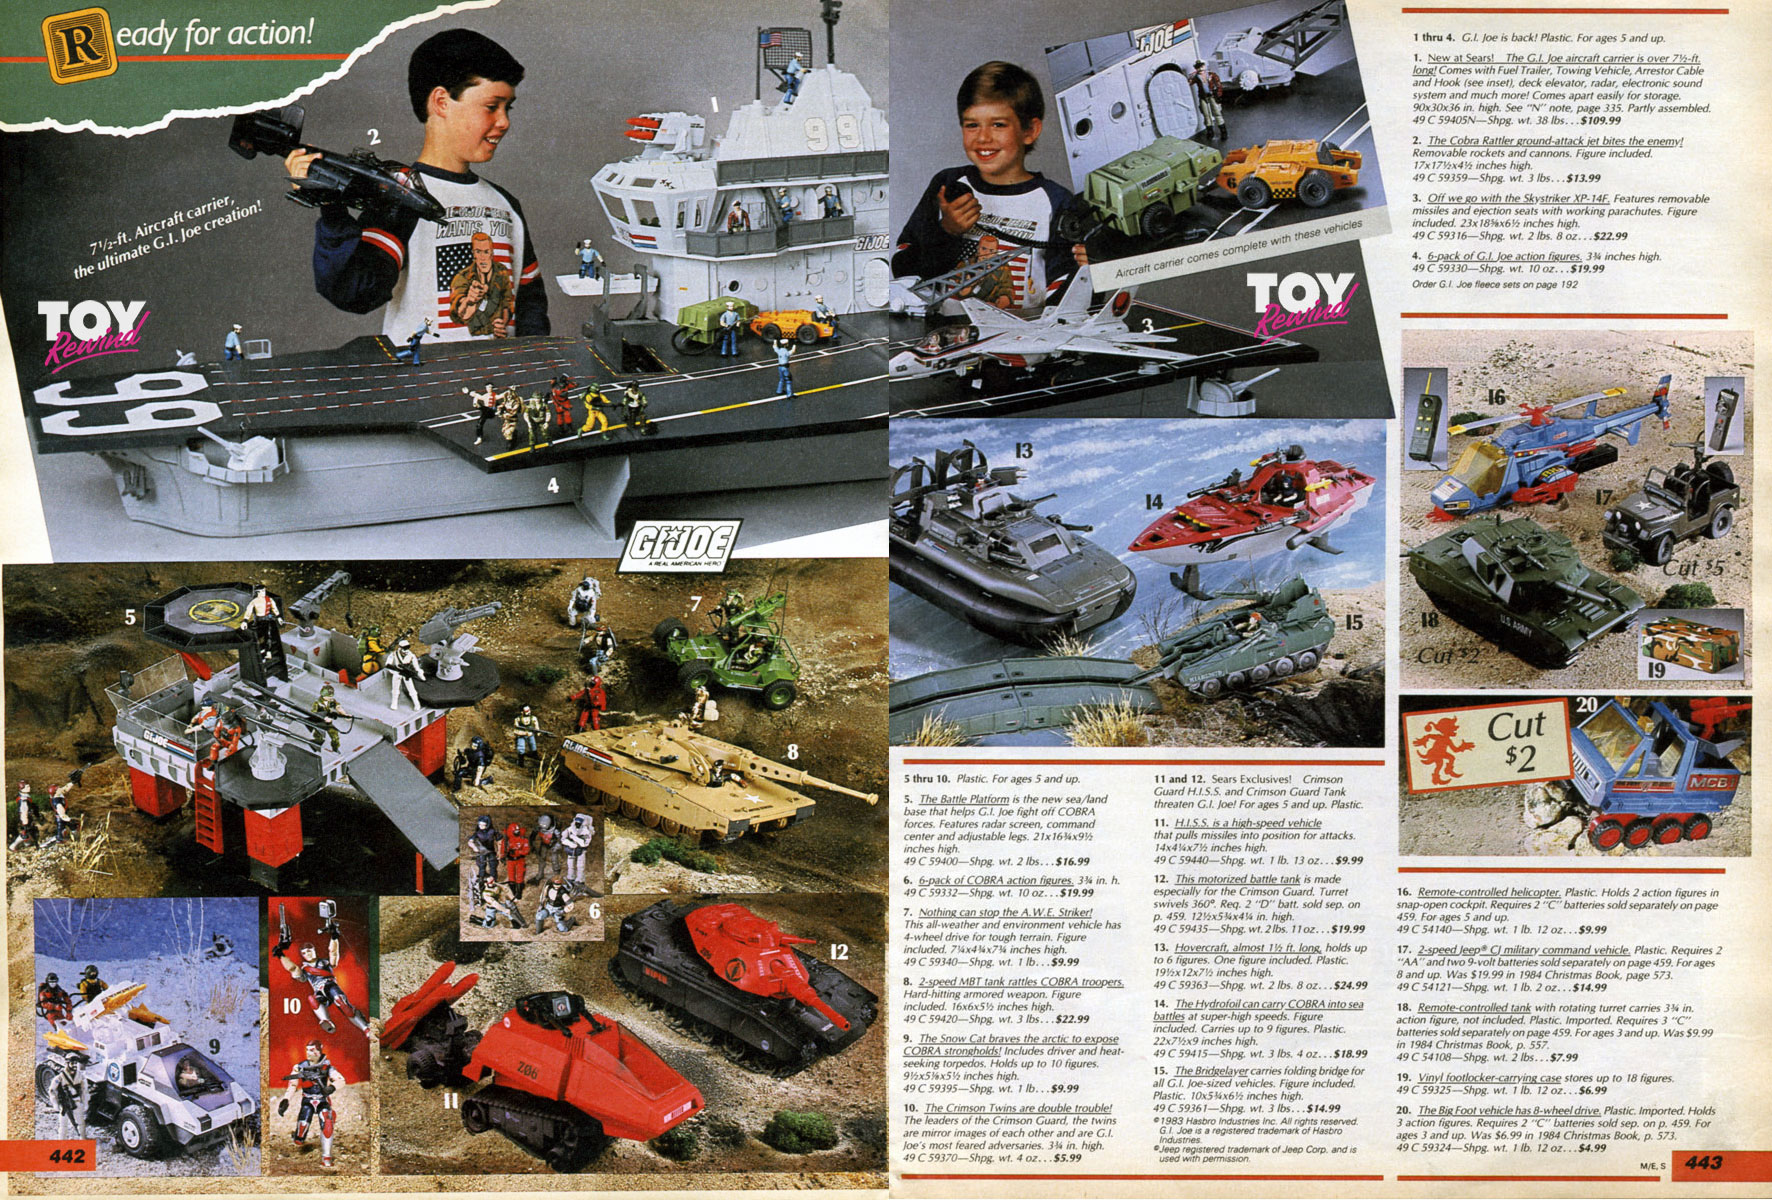 gi joe catalog 1985 - R eady for action! Toy Gede